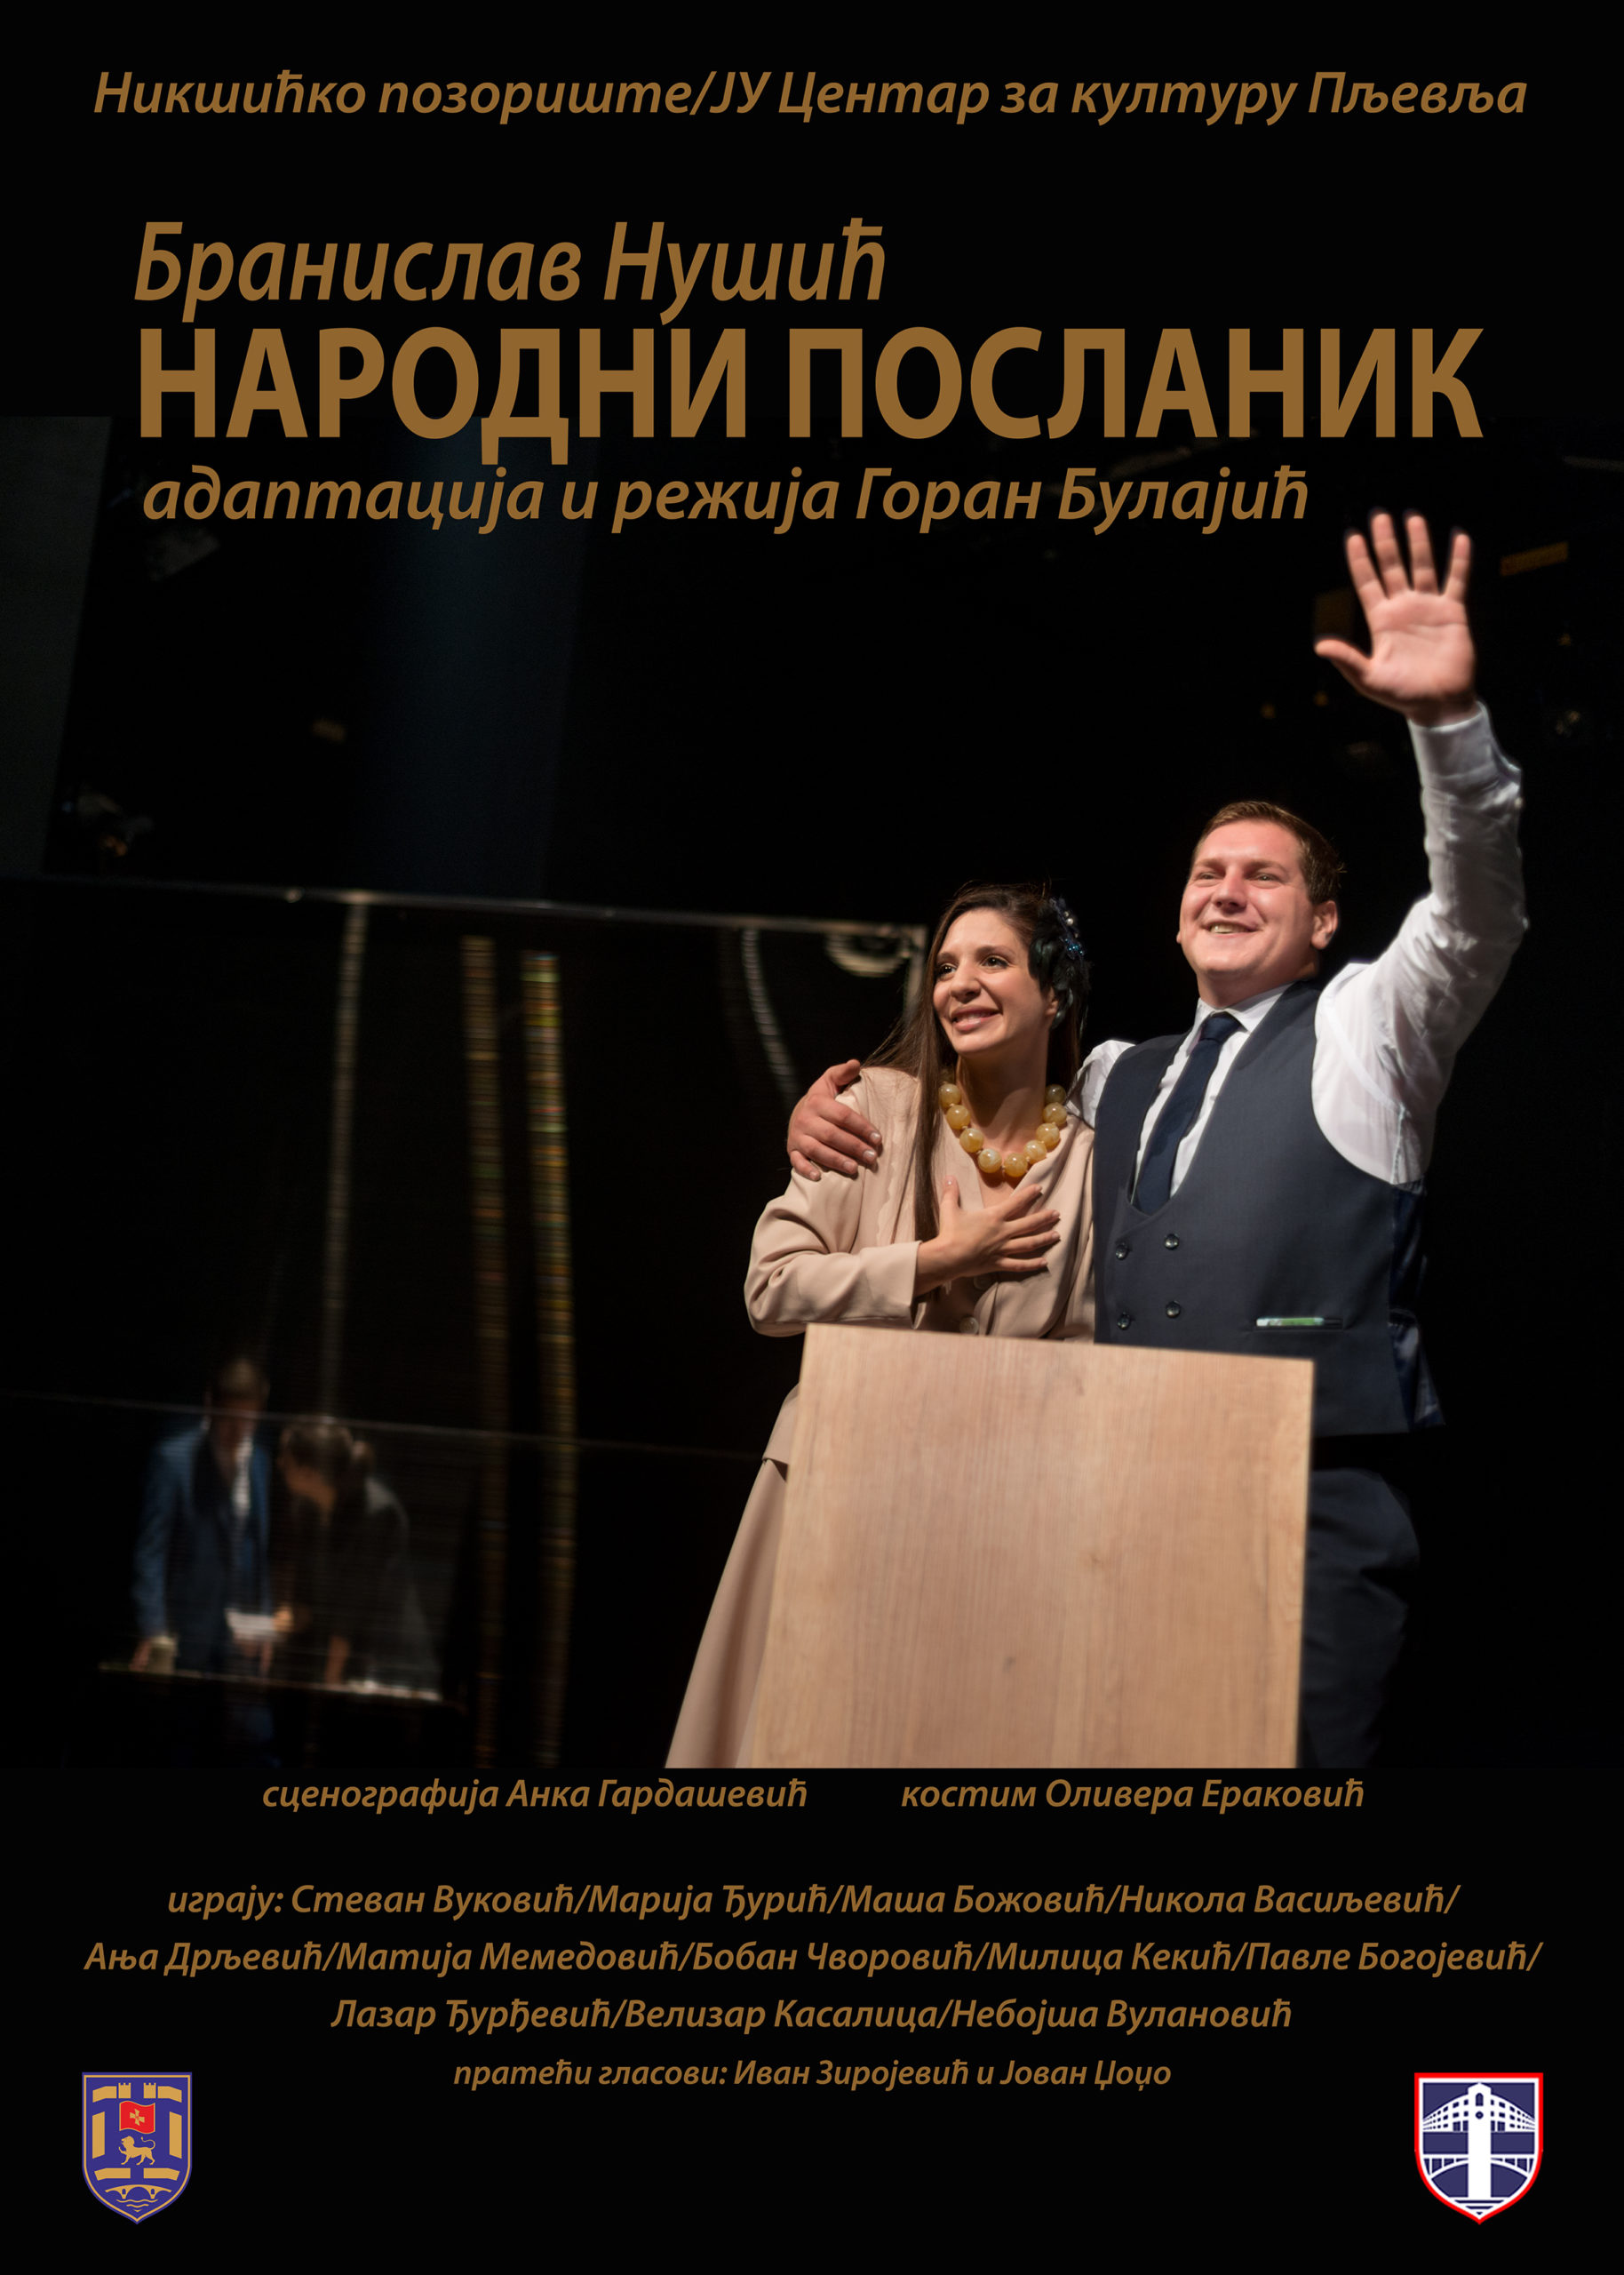 Na martovskom repertoaru predstave, koncerti i izložba